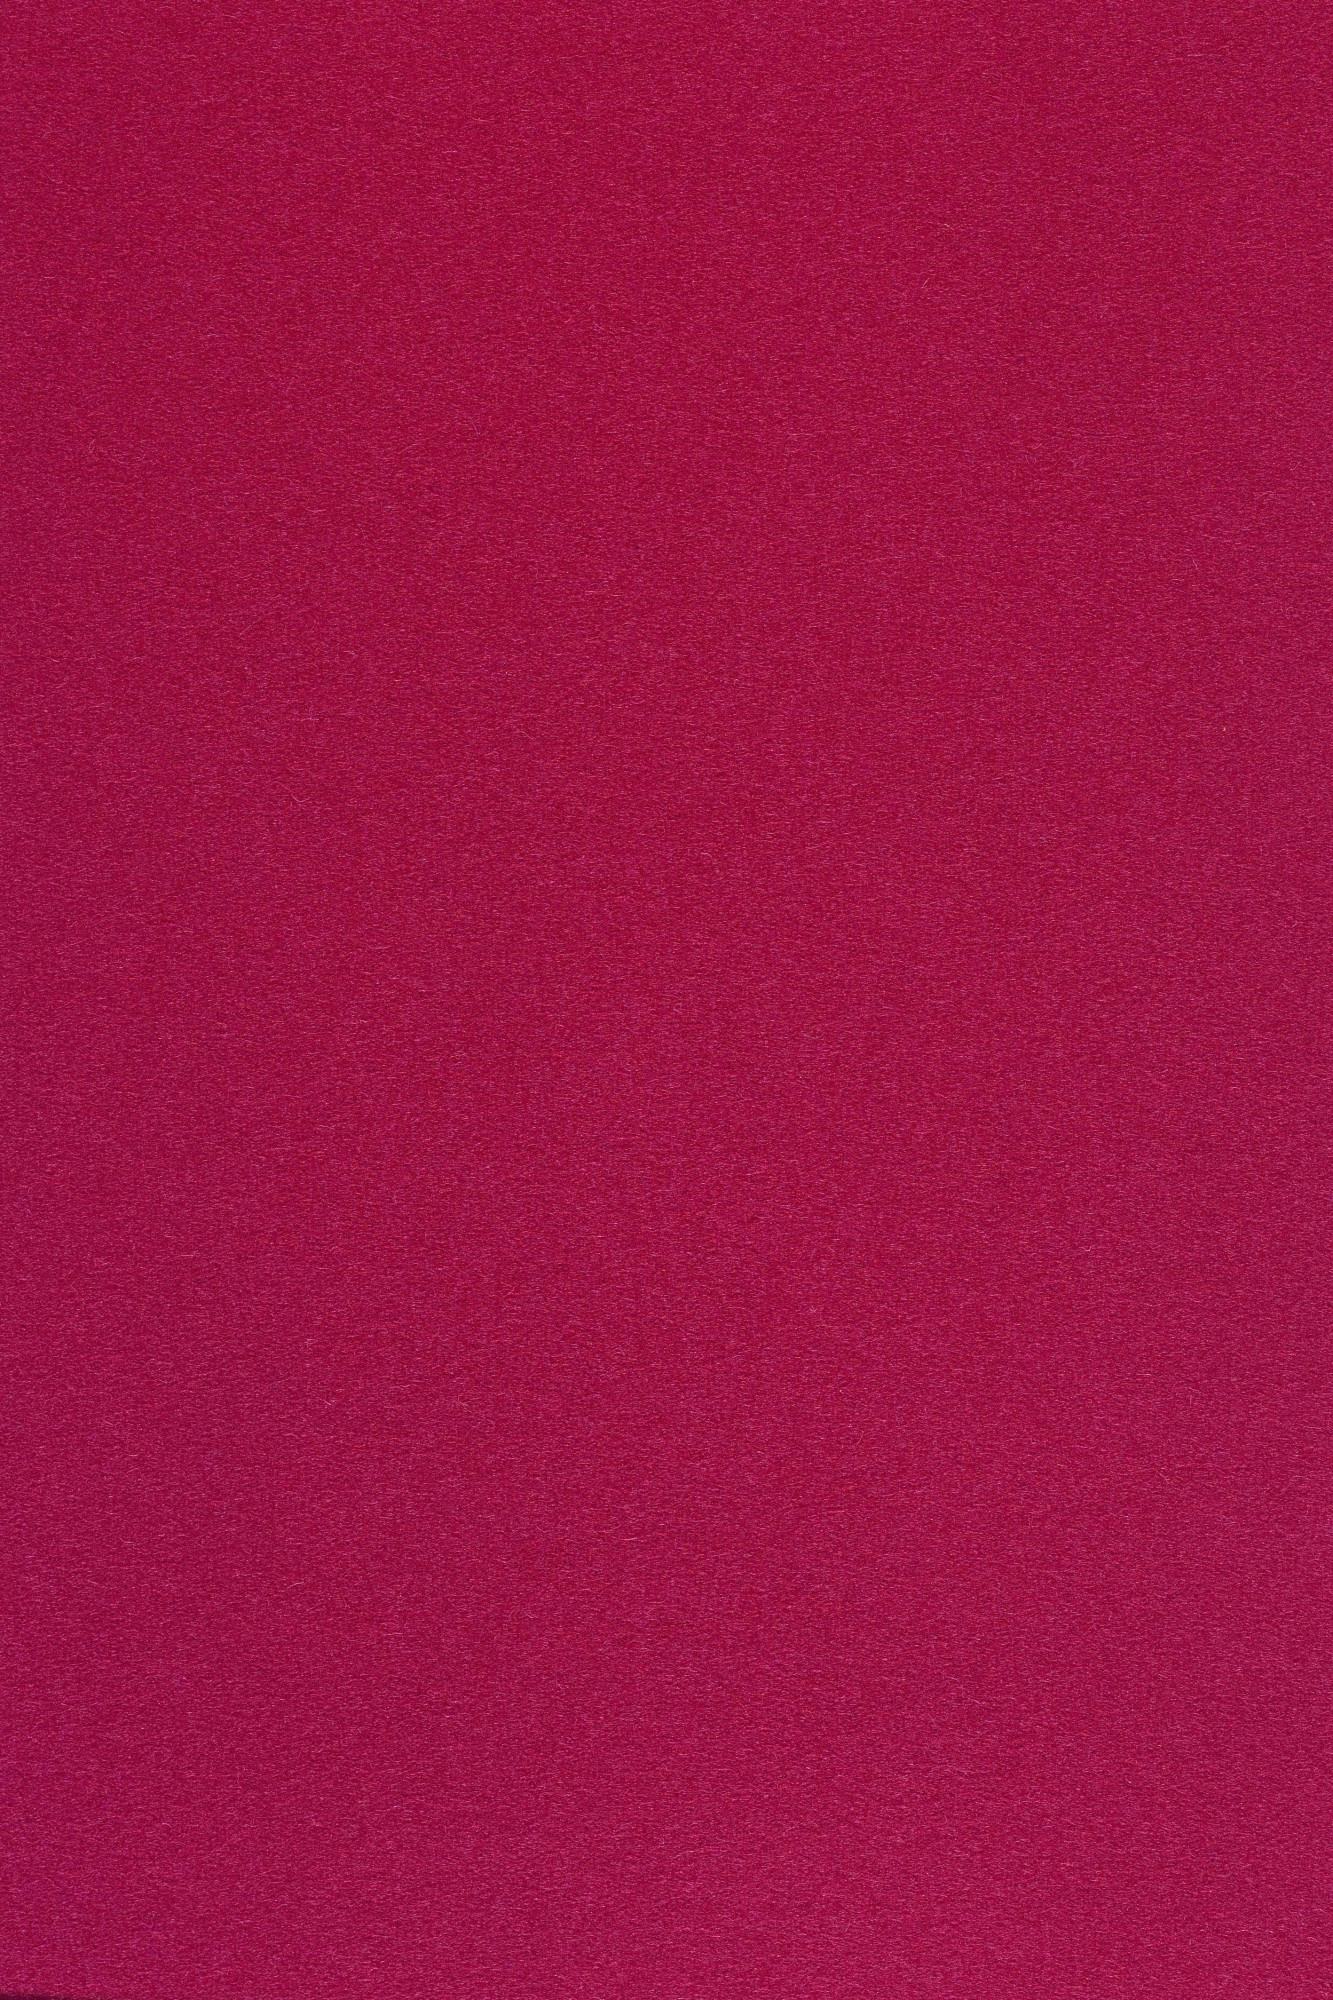 Fabric sample Divina 3 636 pink